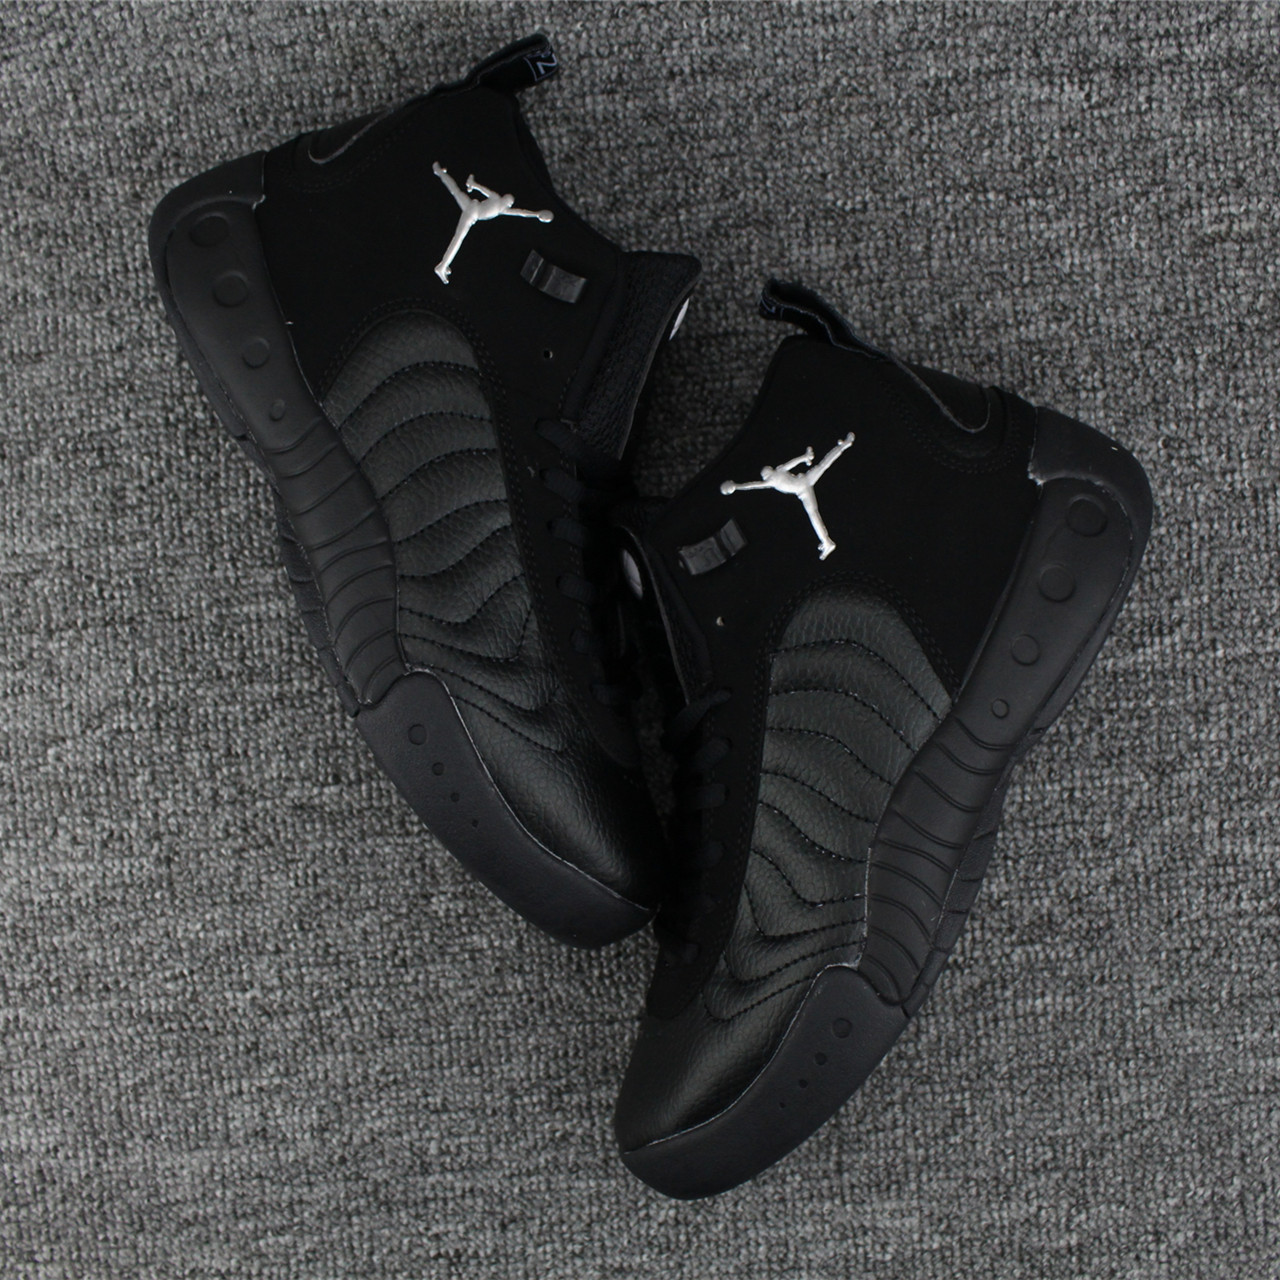 Nike Air Jordan Jumpman Pro Air Jordan 125 Men Basketball Shoes Black All Febbuy 9475